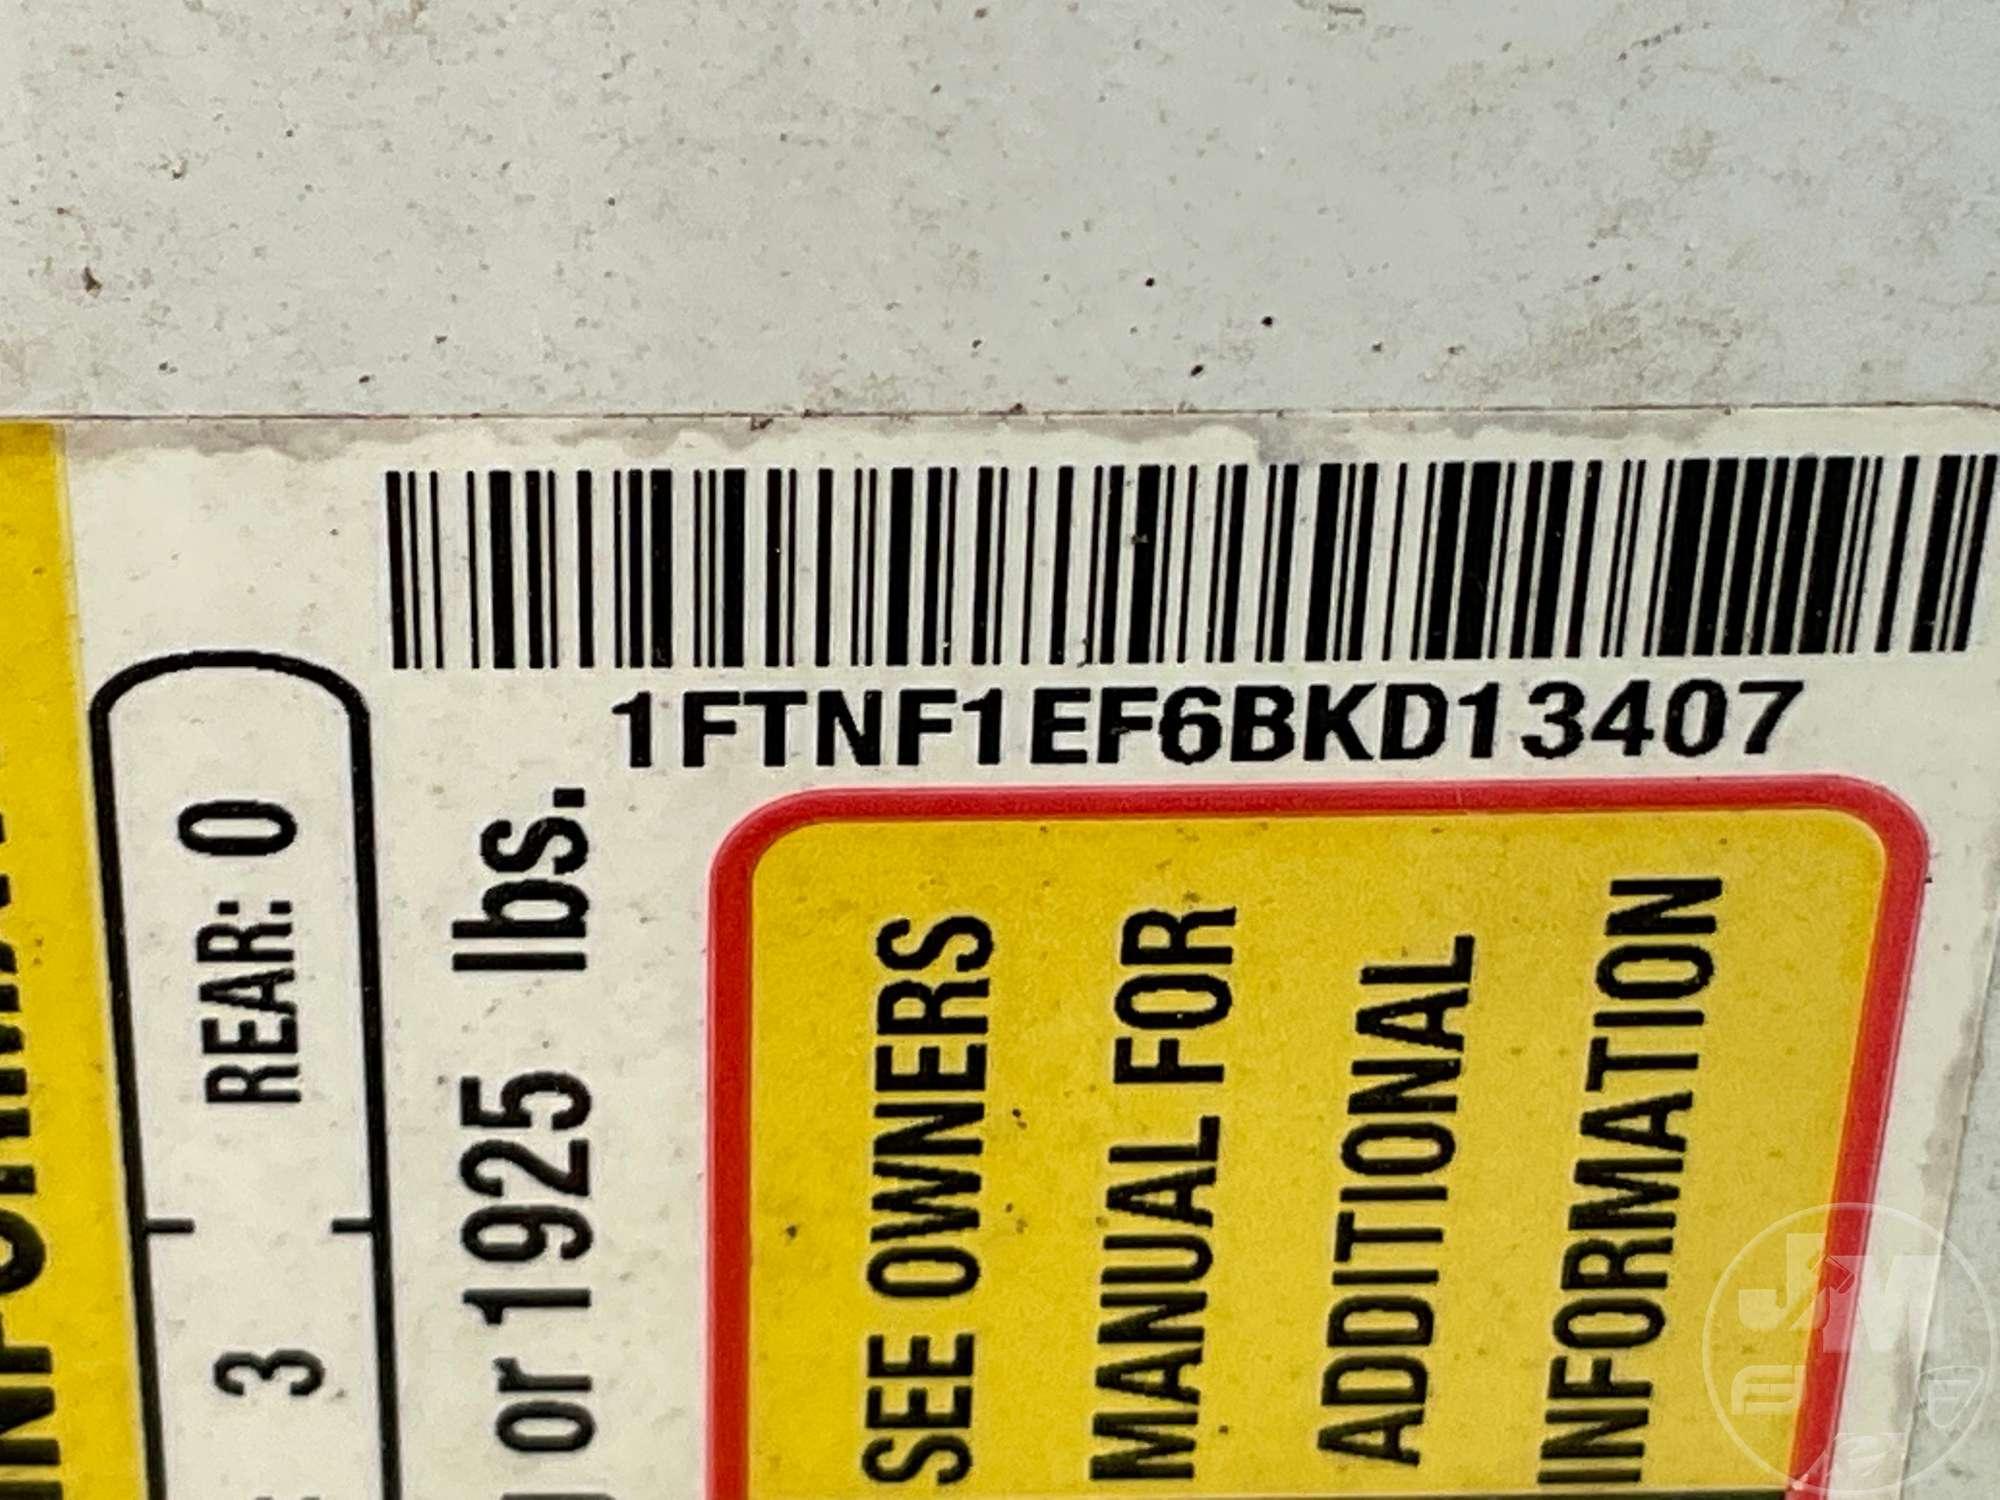 2011 FORD F-150 XL REGULAR CAB 4X4 PICKUP VIN: 1FTNF1EF6BKD13407